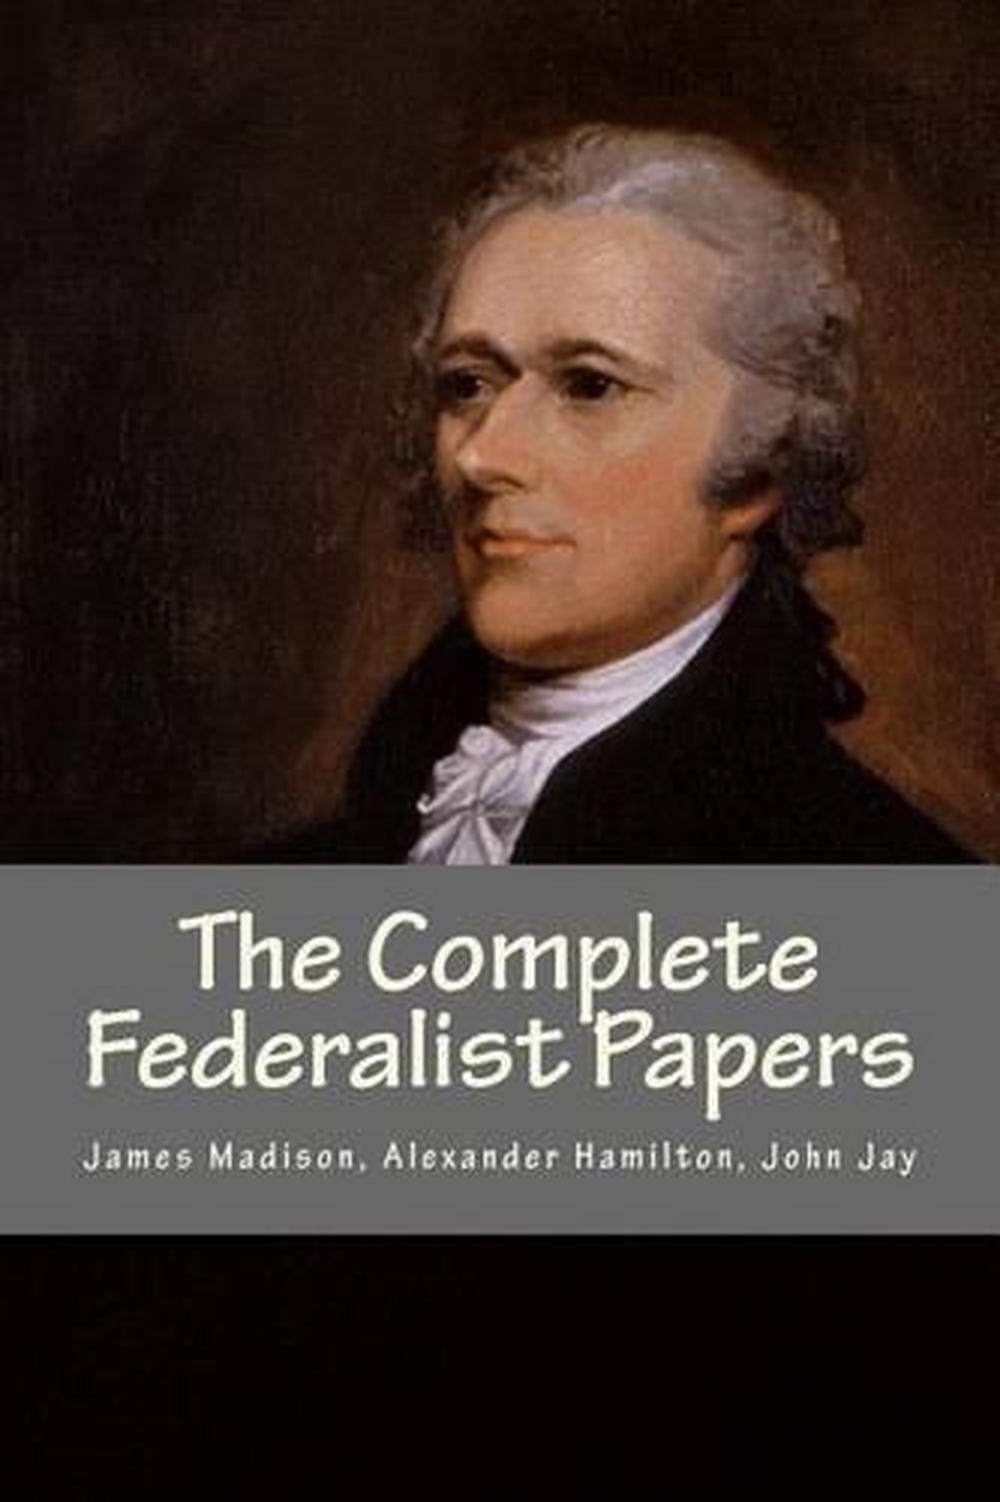 federalist paper writers